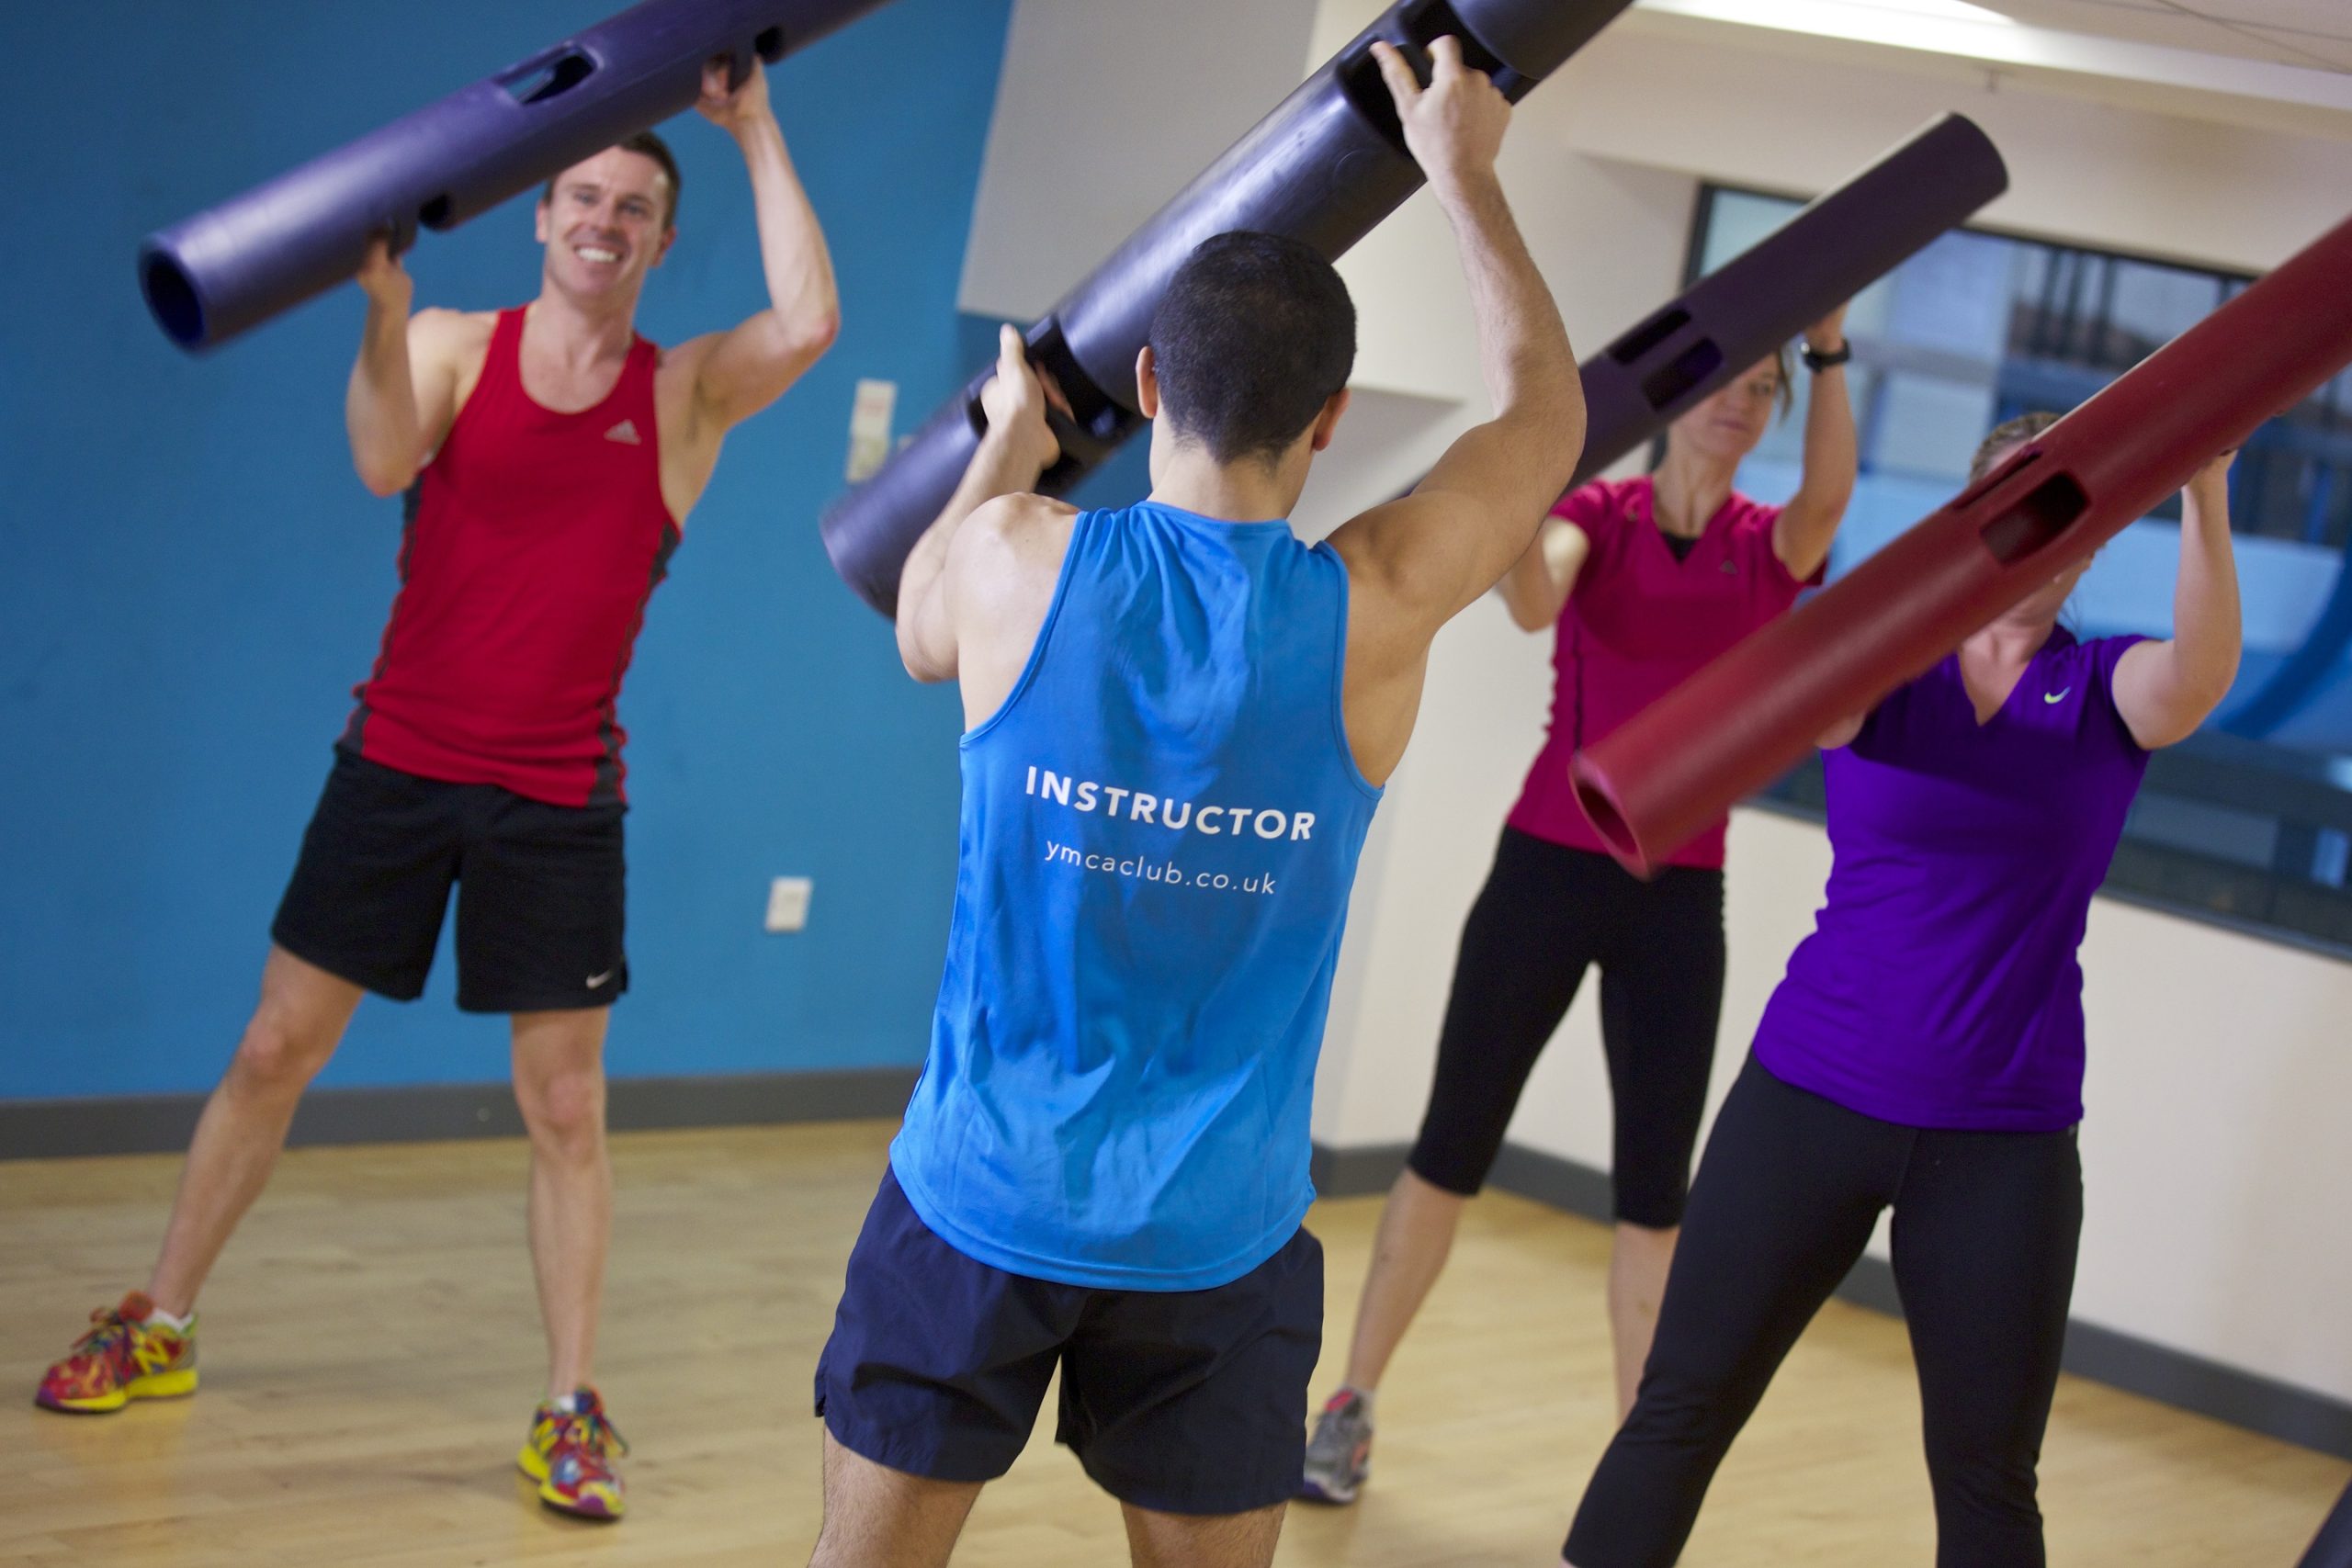 YMCA club uses functional training tool, ViPR